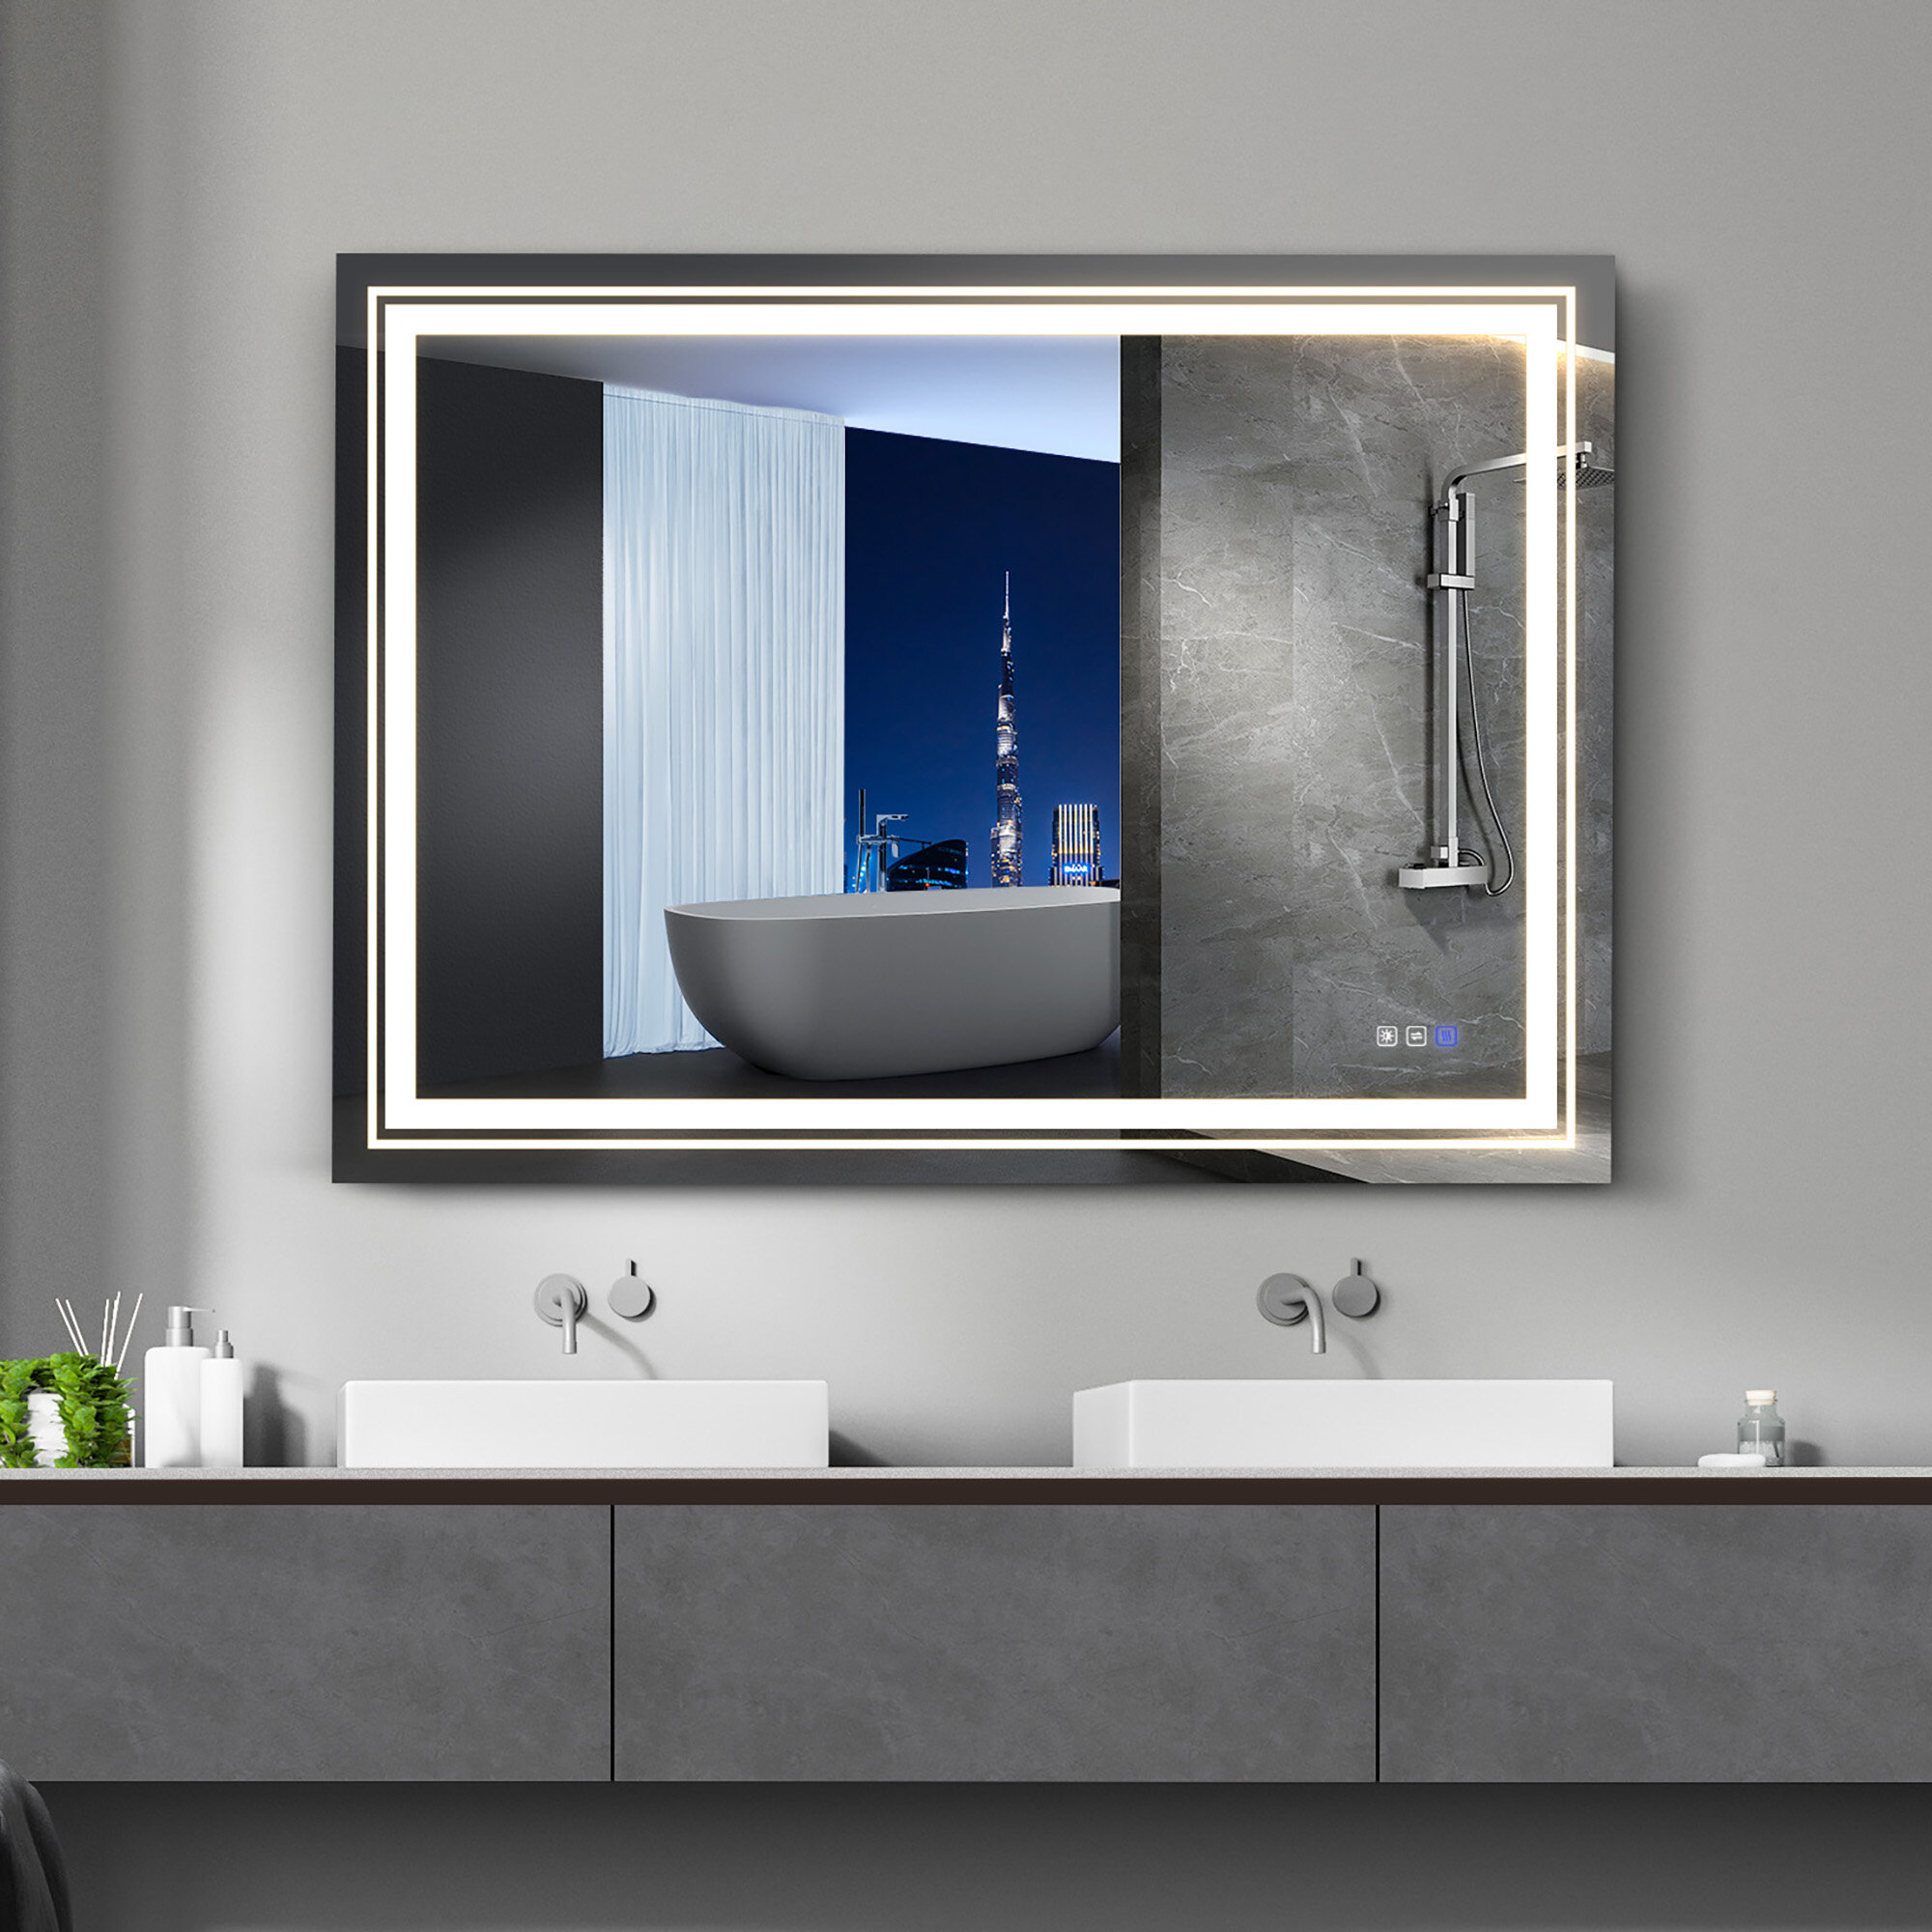 LED Wall Mounted Backlit Mirror Bathroom Vanity Makeup Mirror Dimmable &Anti Fog 